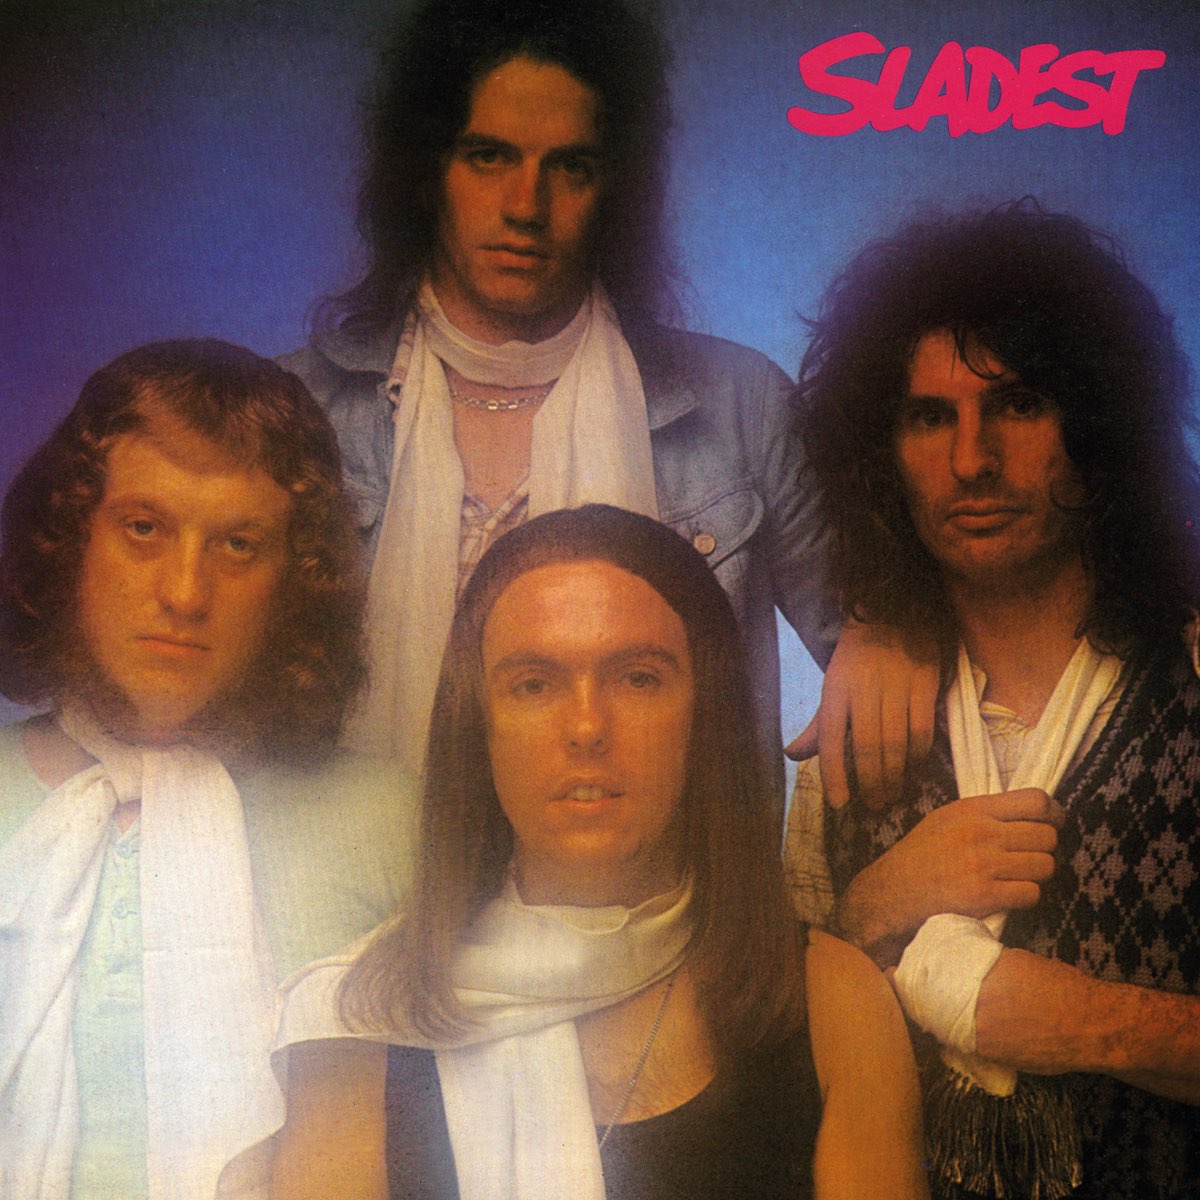 Slade: Sladest (Coloured Vinyl LP)